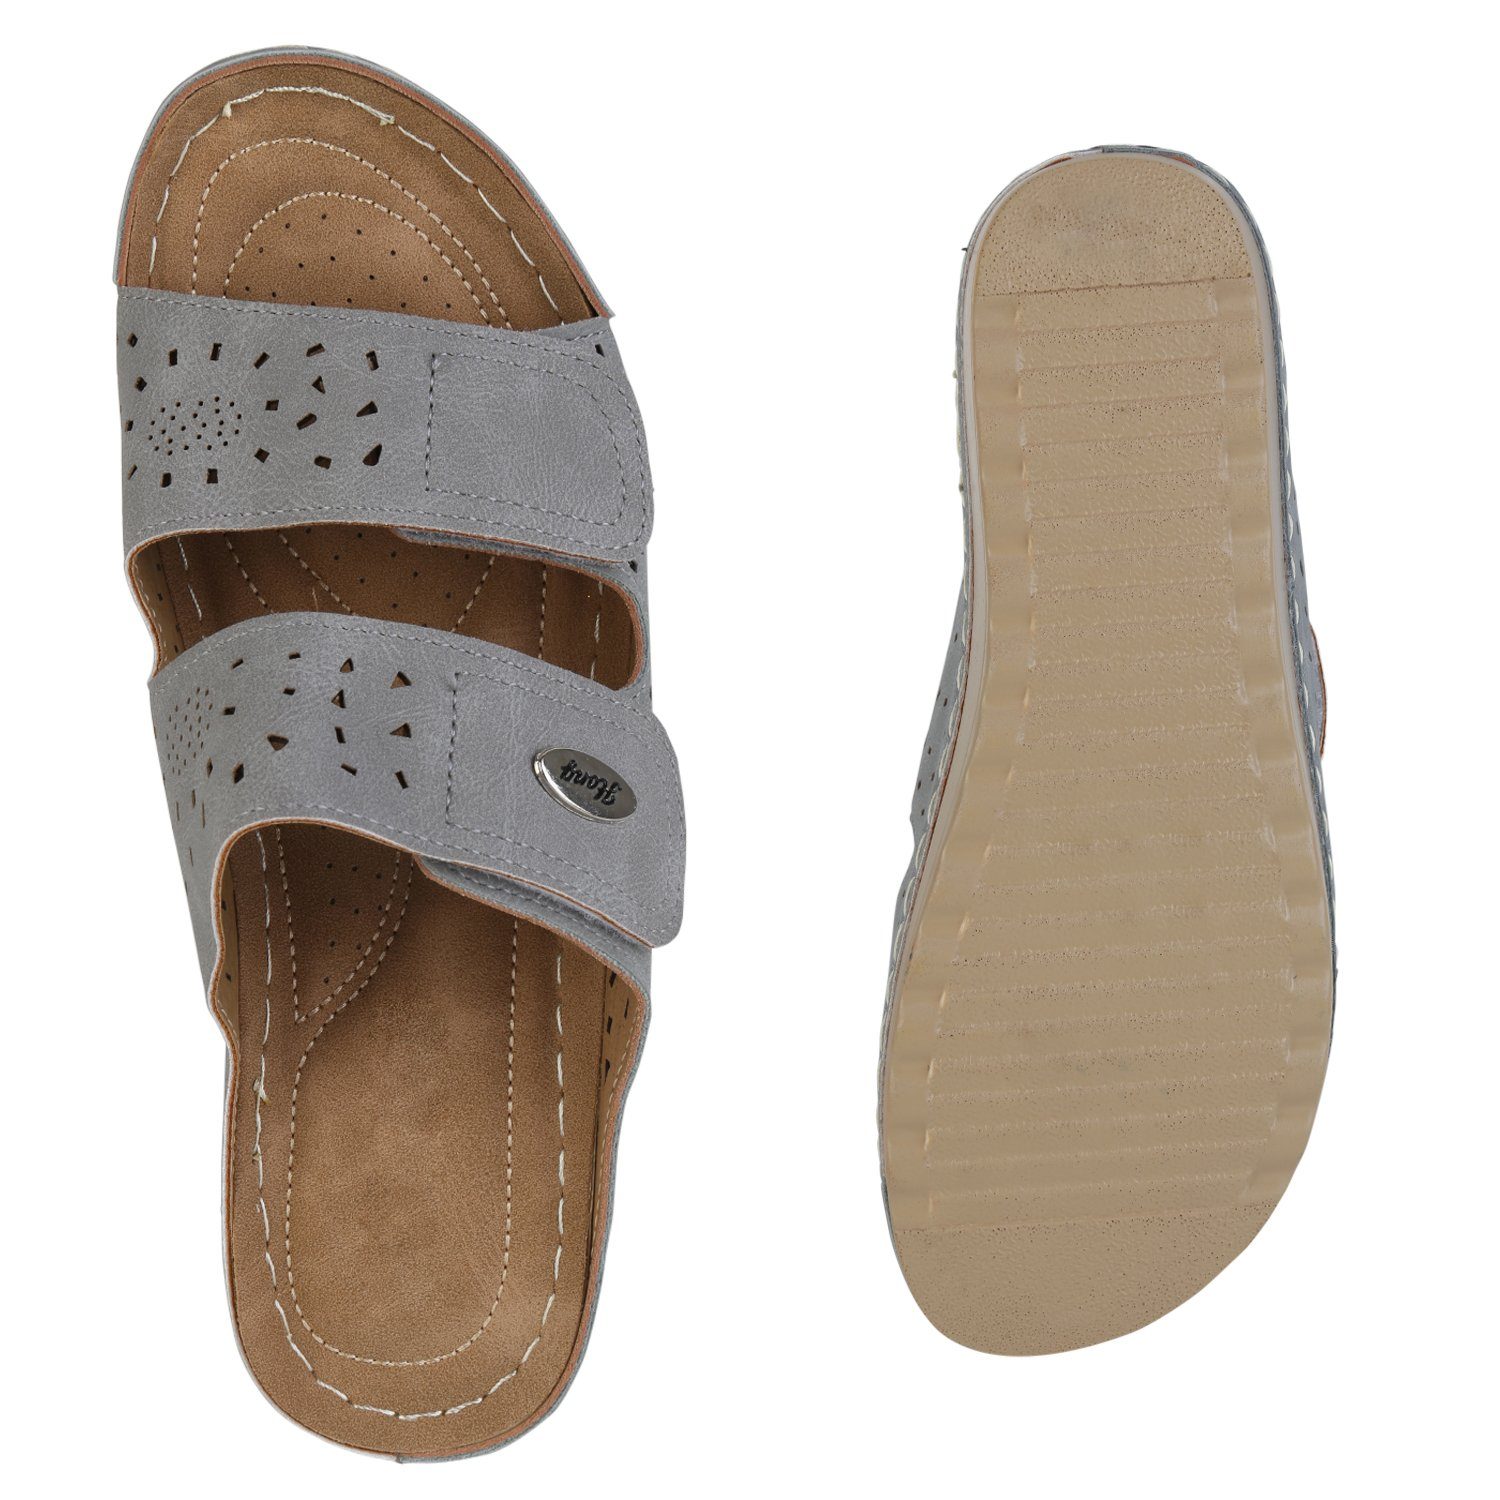 840317 VAN Schuhe Grau Sandalette HILL